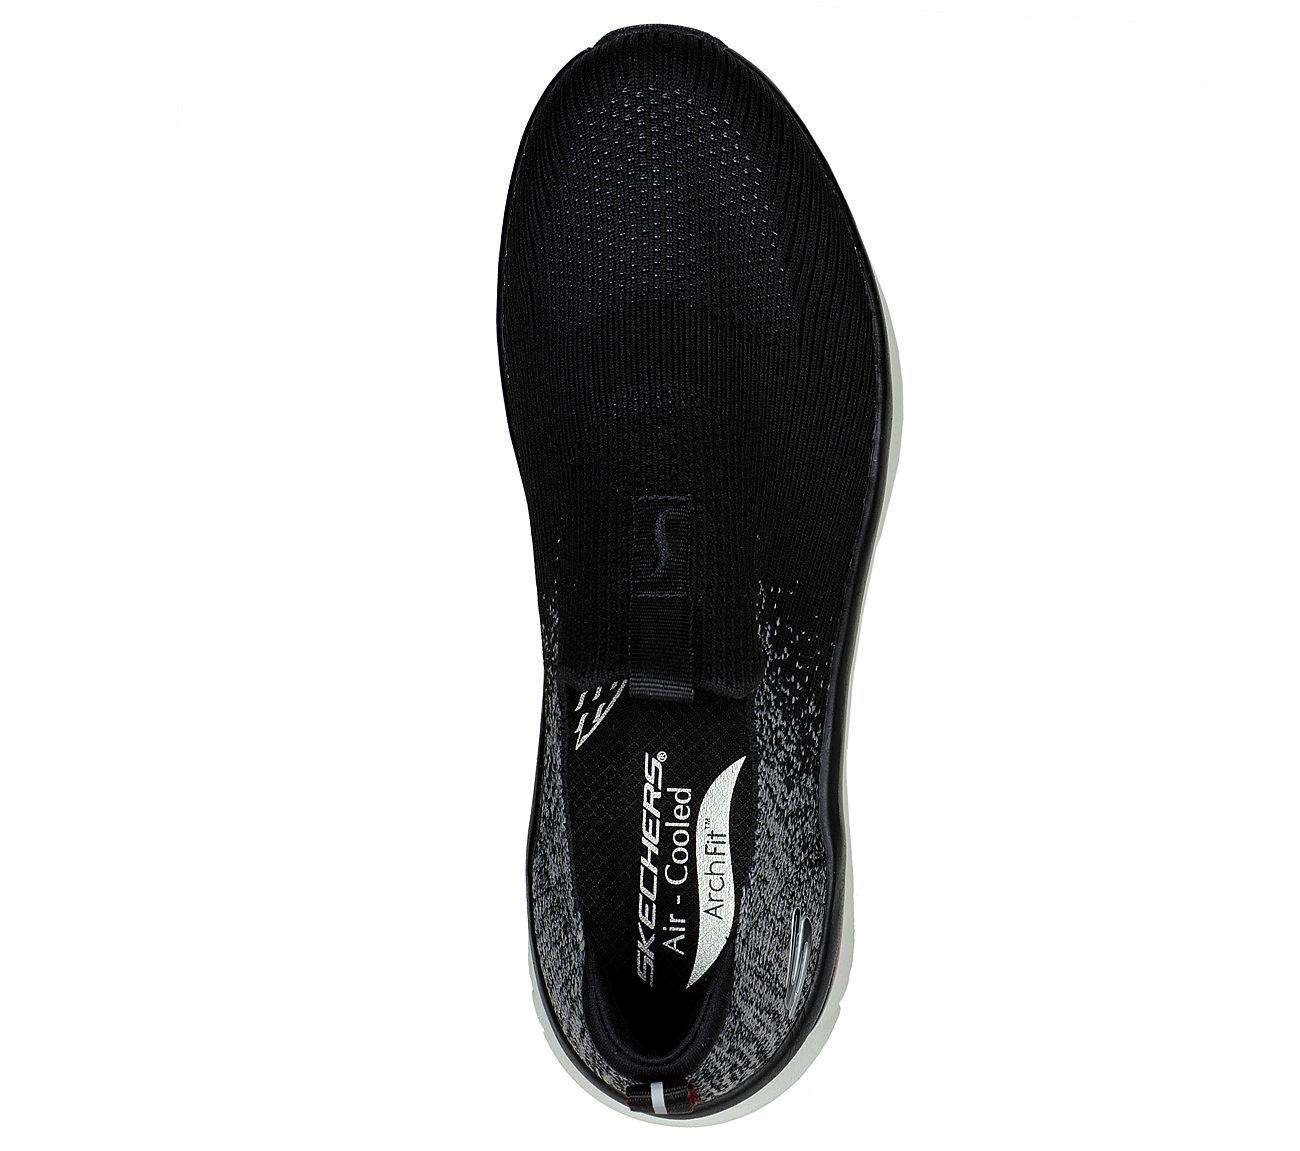 ARCH FIT D'LUX-KEY JOURNEY, BLACK/WHITE Footwear Top View